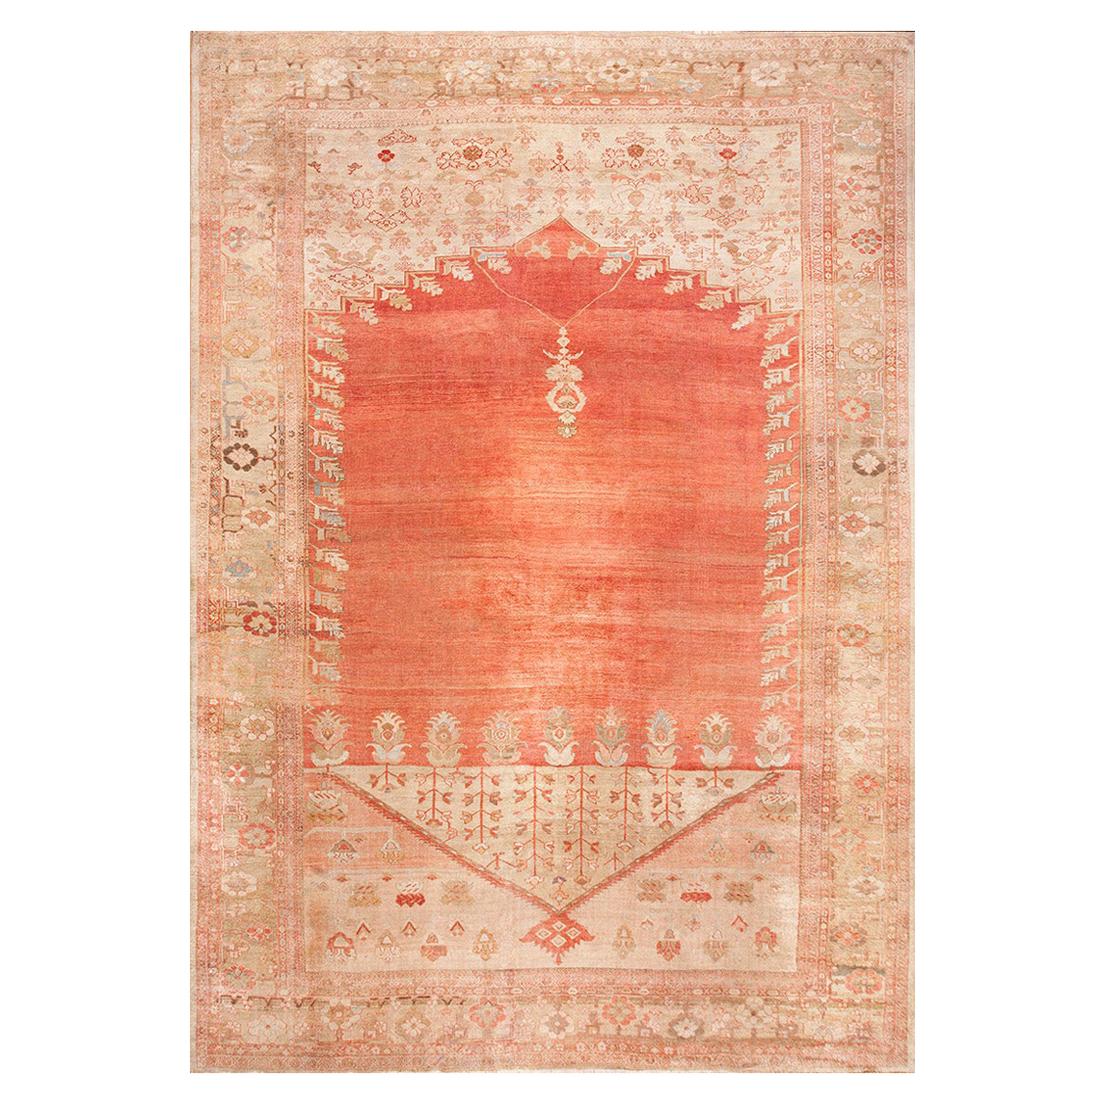 Antique Persian Ziegler Sultanabad Persian Carpet (12'8" x 16'6' - 386 x 502 cm) For Sale